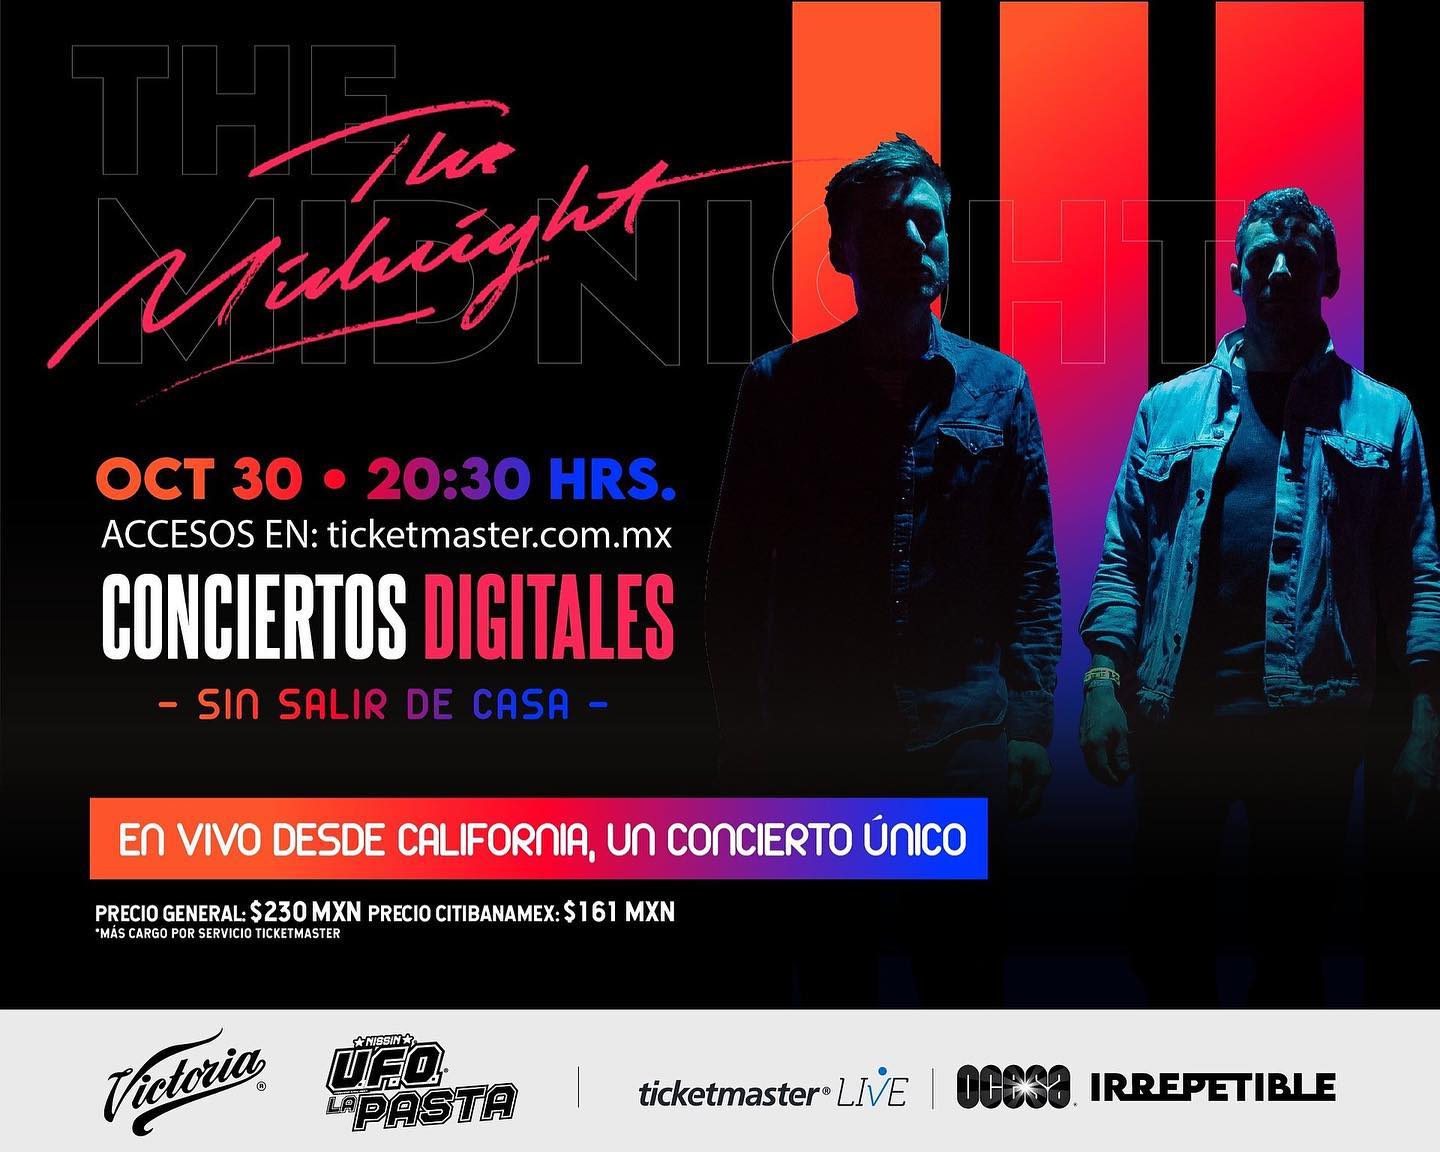  The Midnight concierto virtual